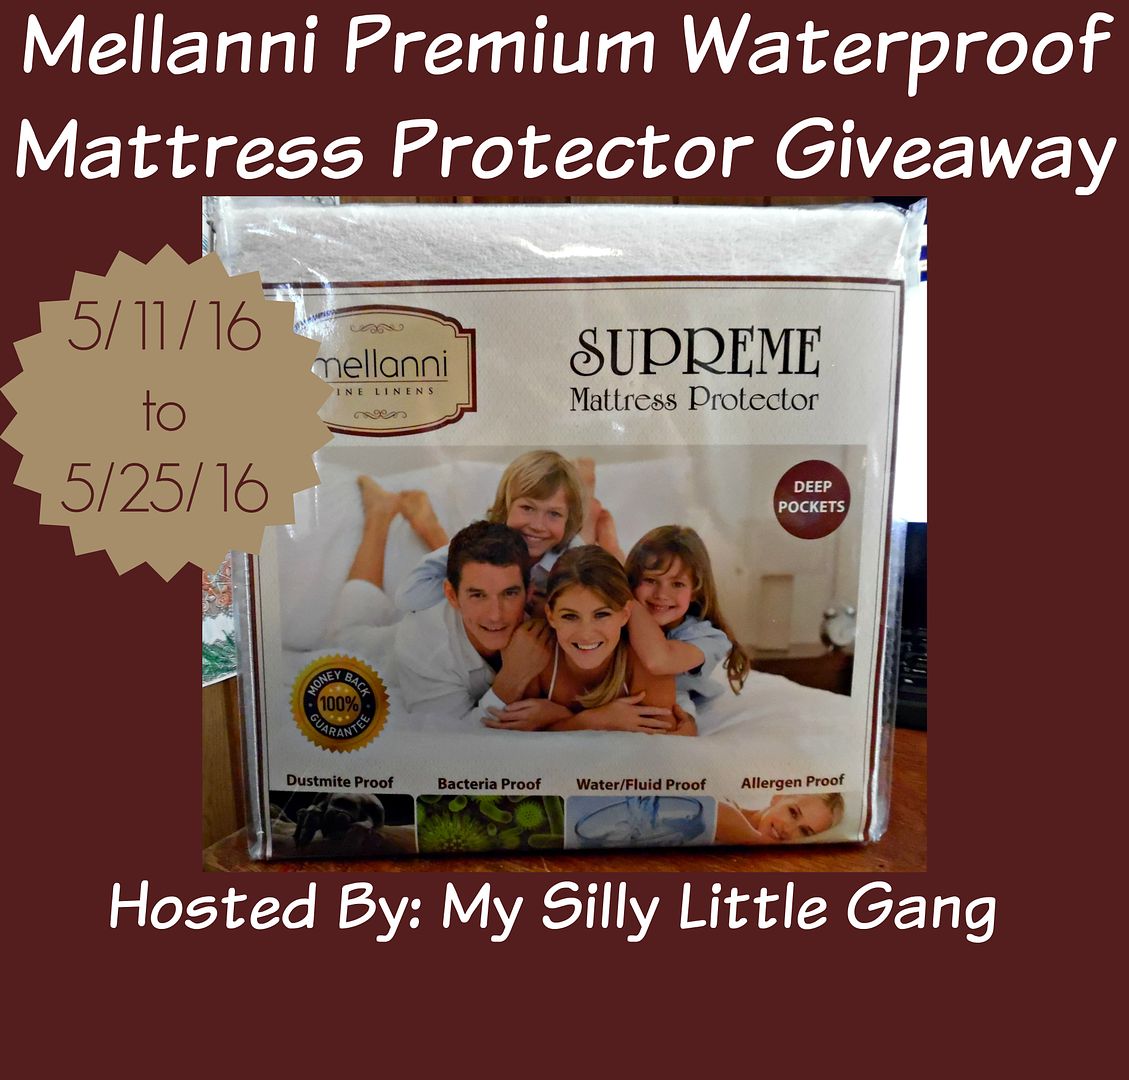 Mattress Protector Giveaway 